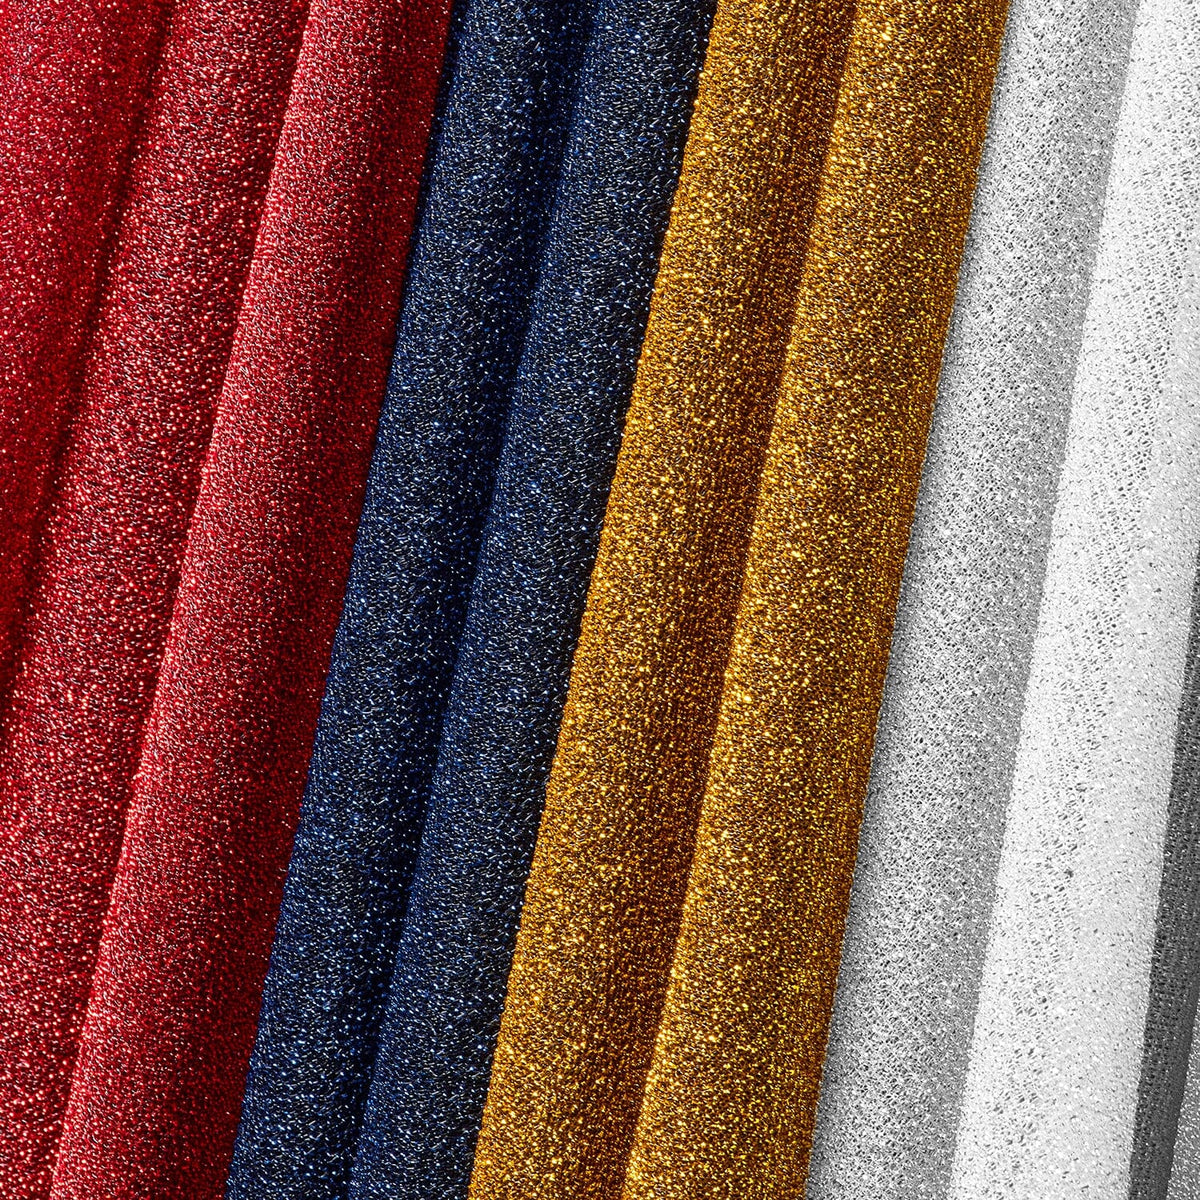 Romex Textiles Polyester Spandex Shiny Lurex Knit Fabric (3 Yards) -  Sage/Silver 